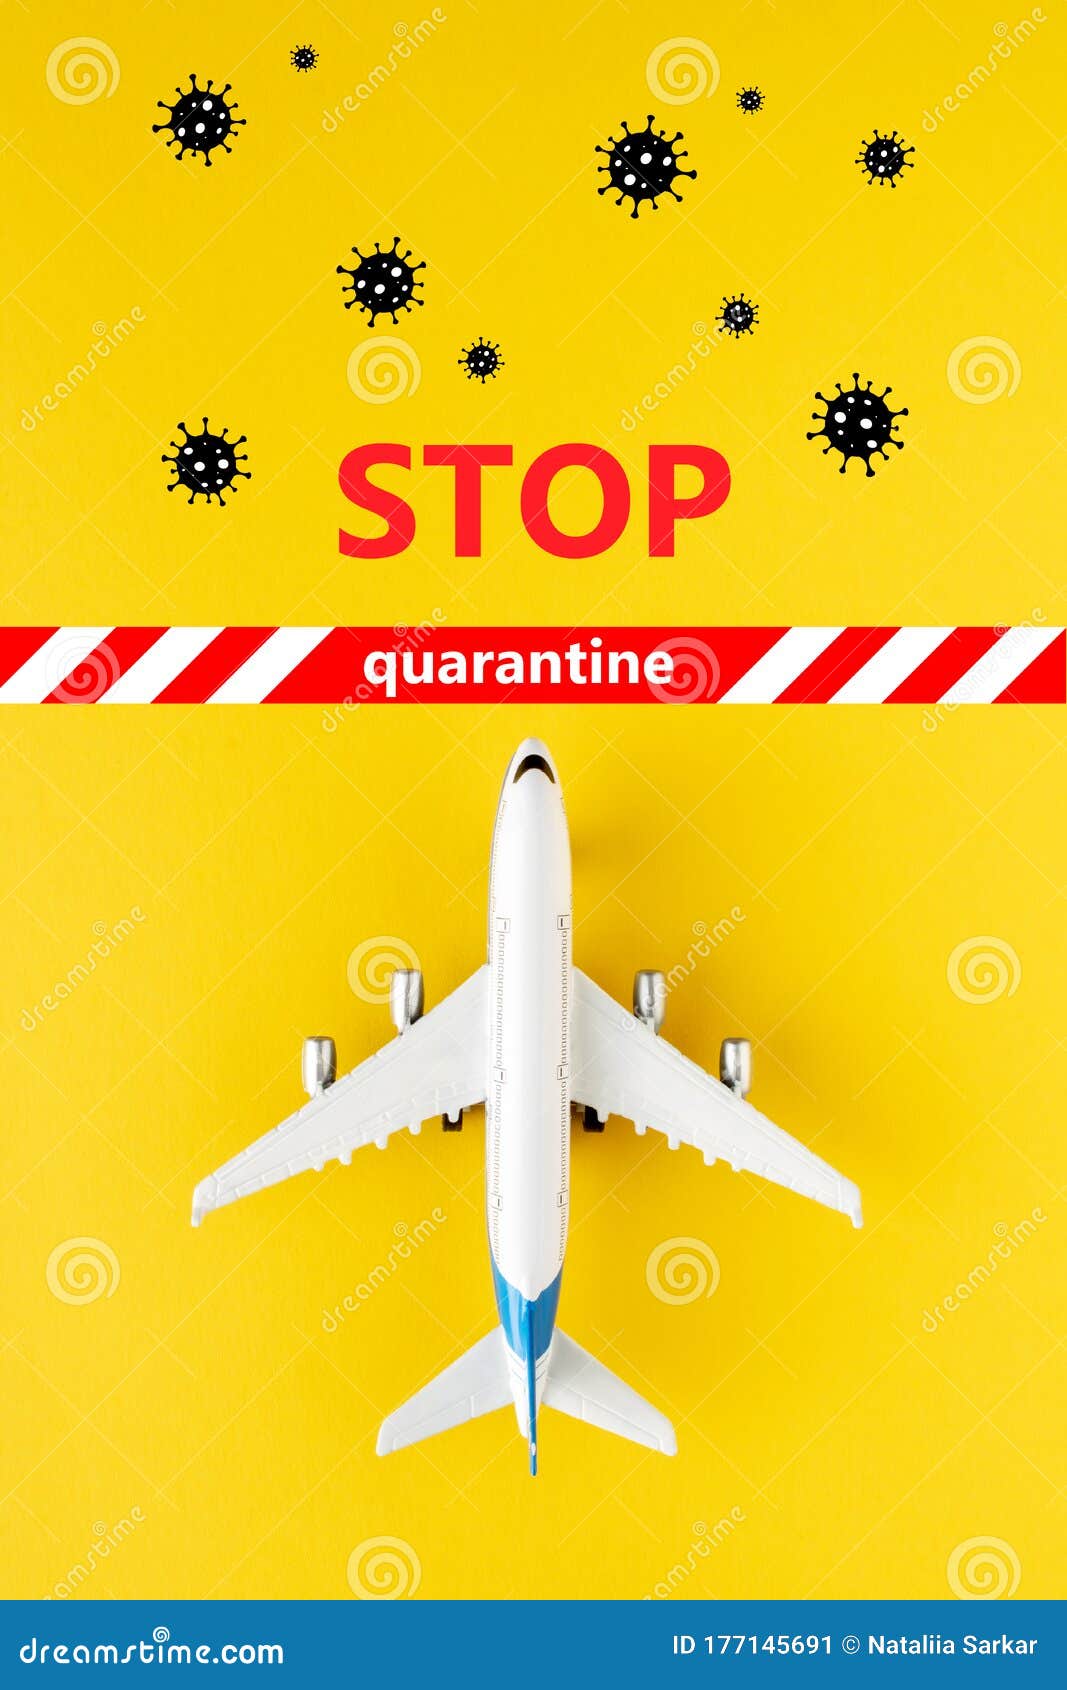 stop coronavirus, quarantined aircraft, cancellation of flights.